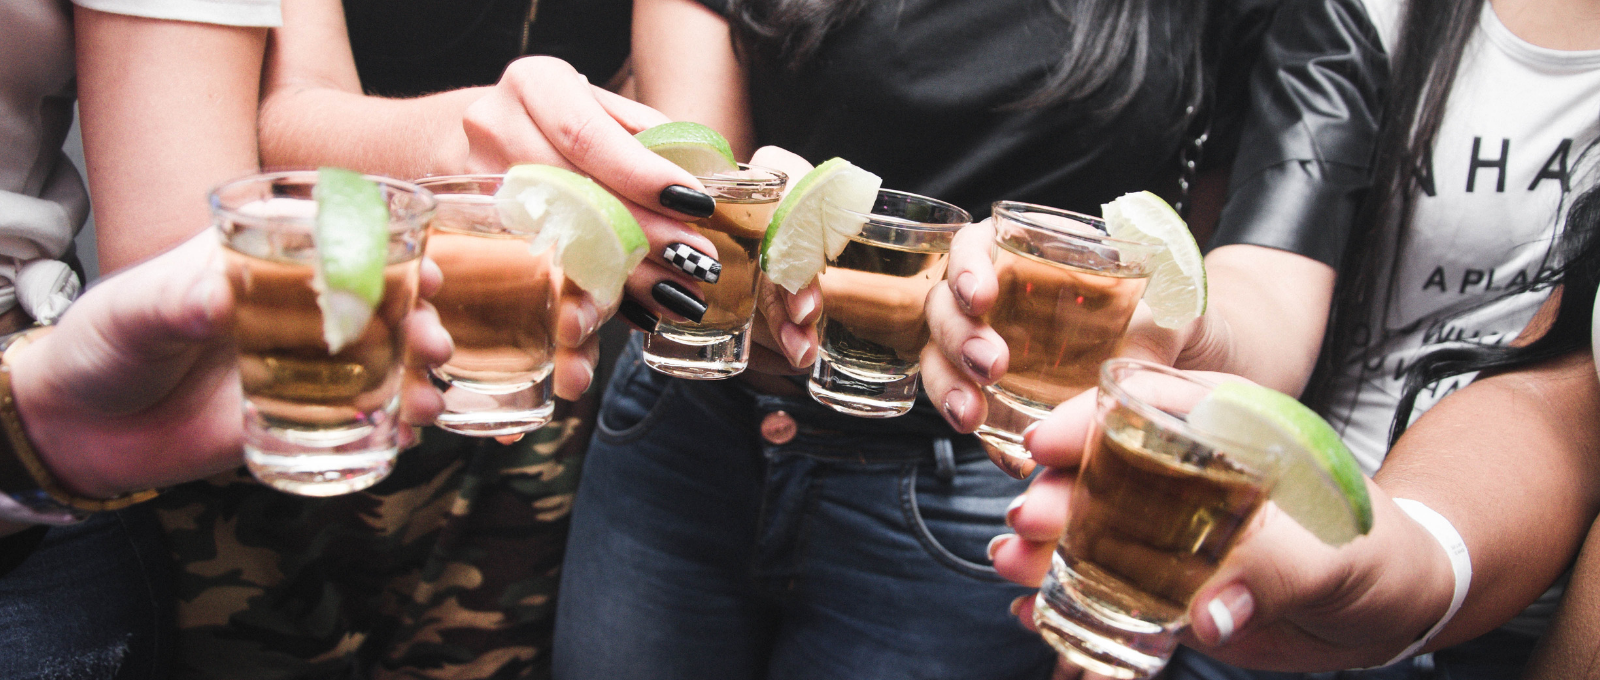 Alcohol effects on teenage brain as kids drink shots